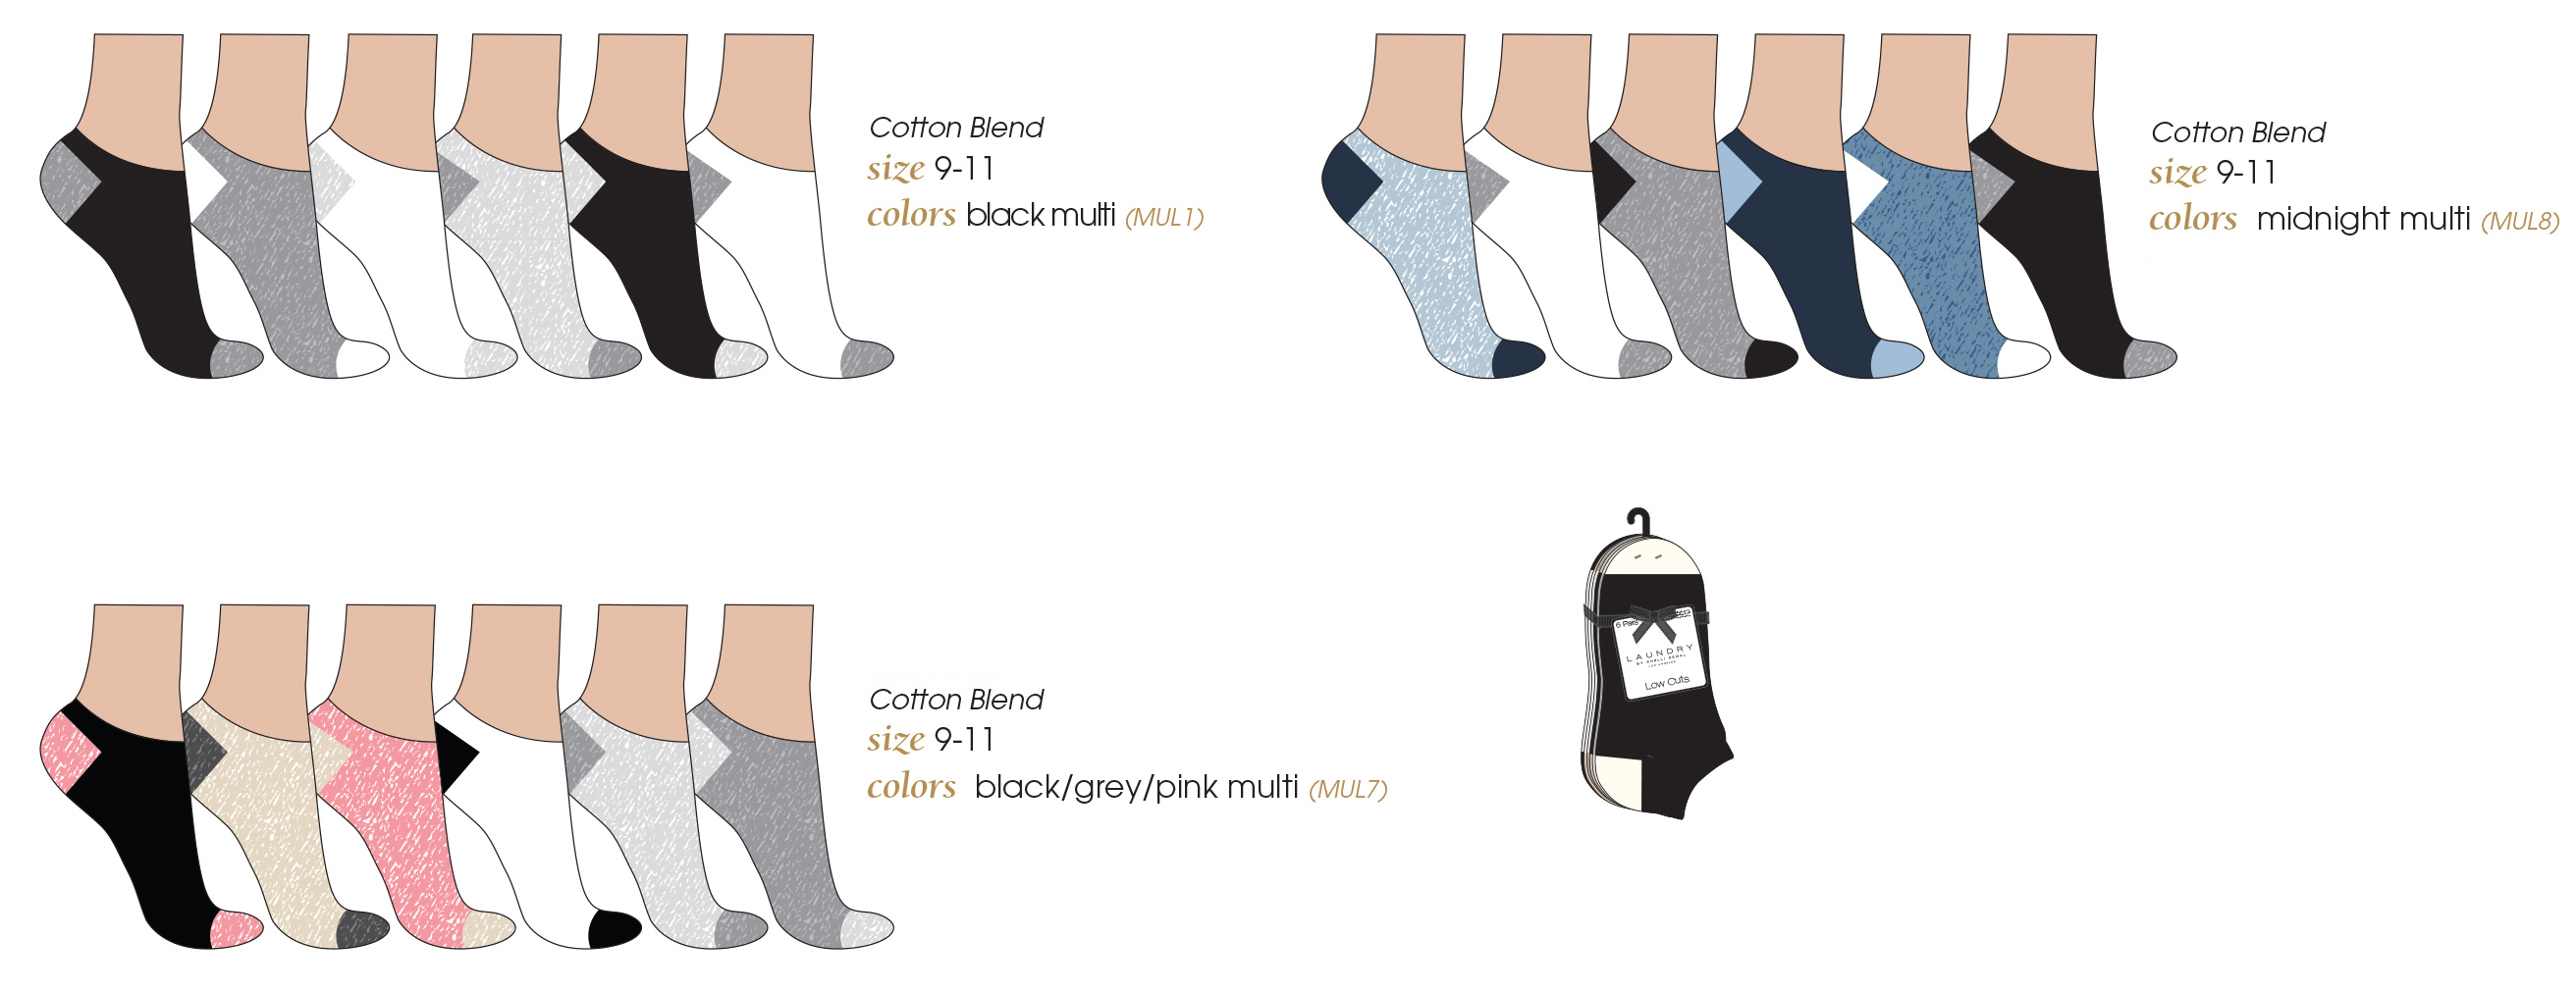 Laundry by Shelli Segal Women's Low Cut Socks w/ Colored Heel & Toe - Size 9-11 - 6-Pair Packs